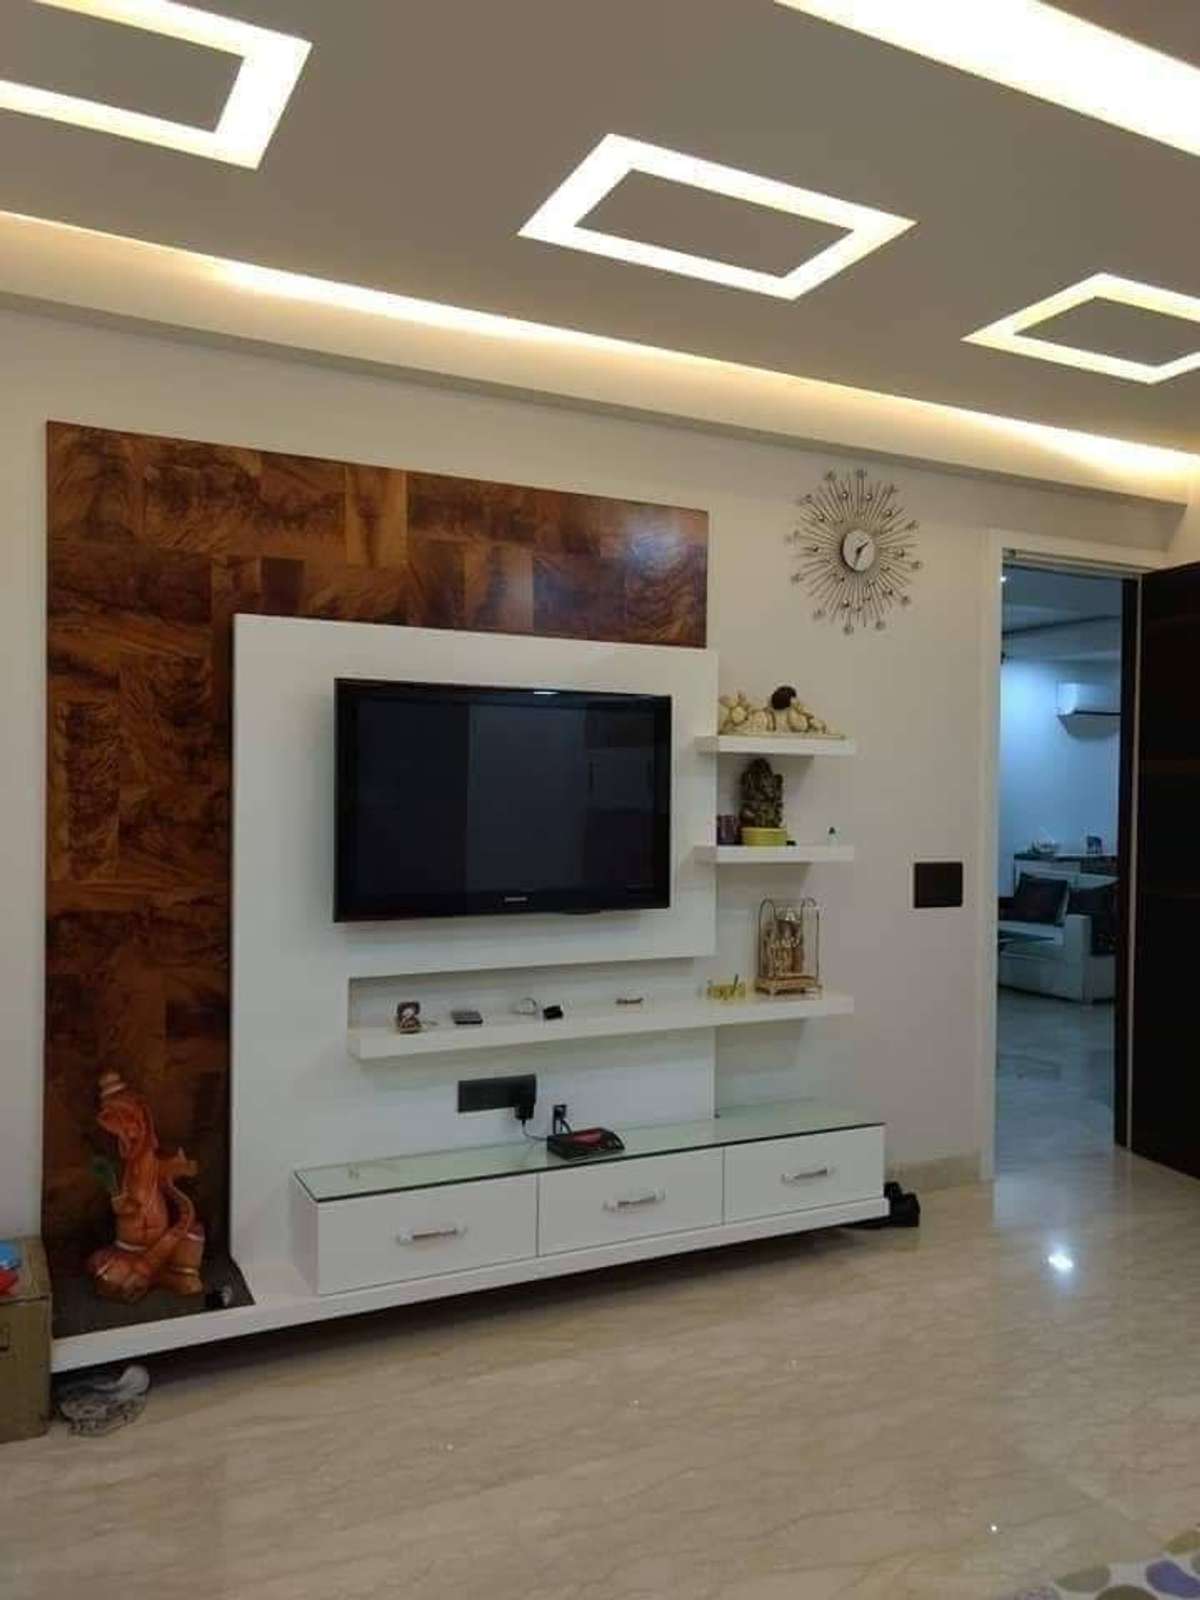 New Design #ModularKitchen  #kichan  #kichenspace  #amitsharma  #Delhihome  #Modularfurniture  #modulerkitchen #InteriorDesigne #Barcounter  #Bar  #DressingTable   #lowbudget  #kolopost  #koloapp  #koloviral #InteriorDesigner  #interiordesin
 #InteriorDesign  #HouseDesigns  #trandingdesign  #tranding #KitchenIdeas  #HouseConstruction  #ModularKitchen  #plywoodlamination  #interiordecoration  #interiordecor   #tvunits  #WardrobeDesigns  #wardrobework  #walldecarativedesign  #walldecorideas  #homeinterior  #custombookcases  #VboardPartition  #AcousticCeiling  #FalseCeiling  #upholstery  #custombeds  #customwardrobe  #wallartdesign  #veneerboardwork  #partitionwall